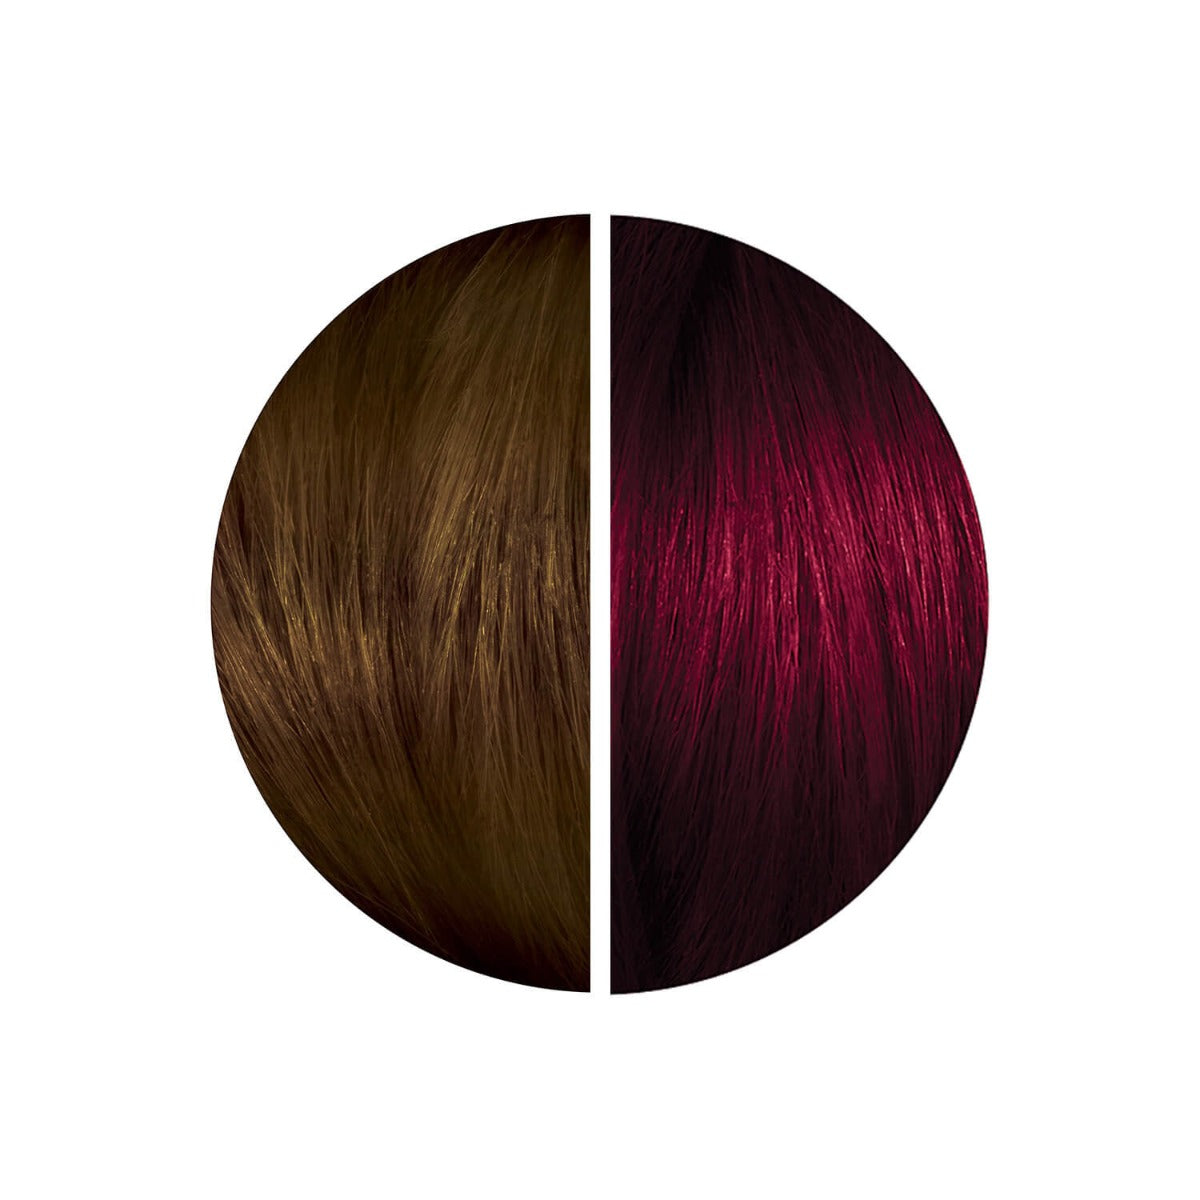 A box of Splat Hair Color's Melts Strawberry Hair Dye